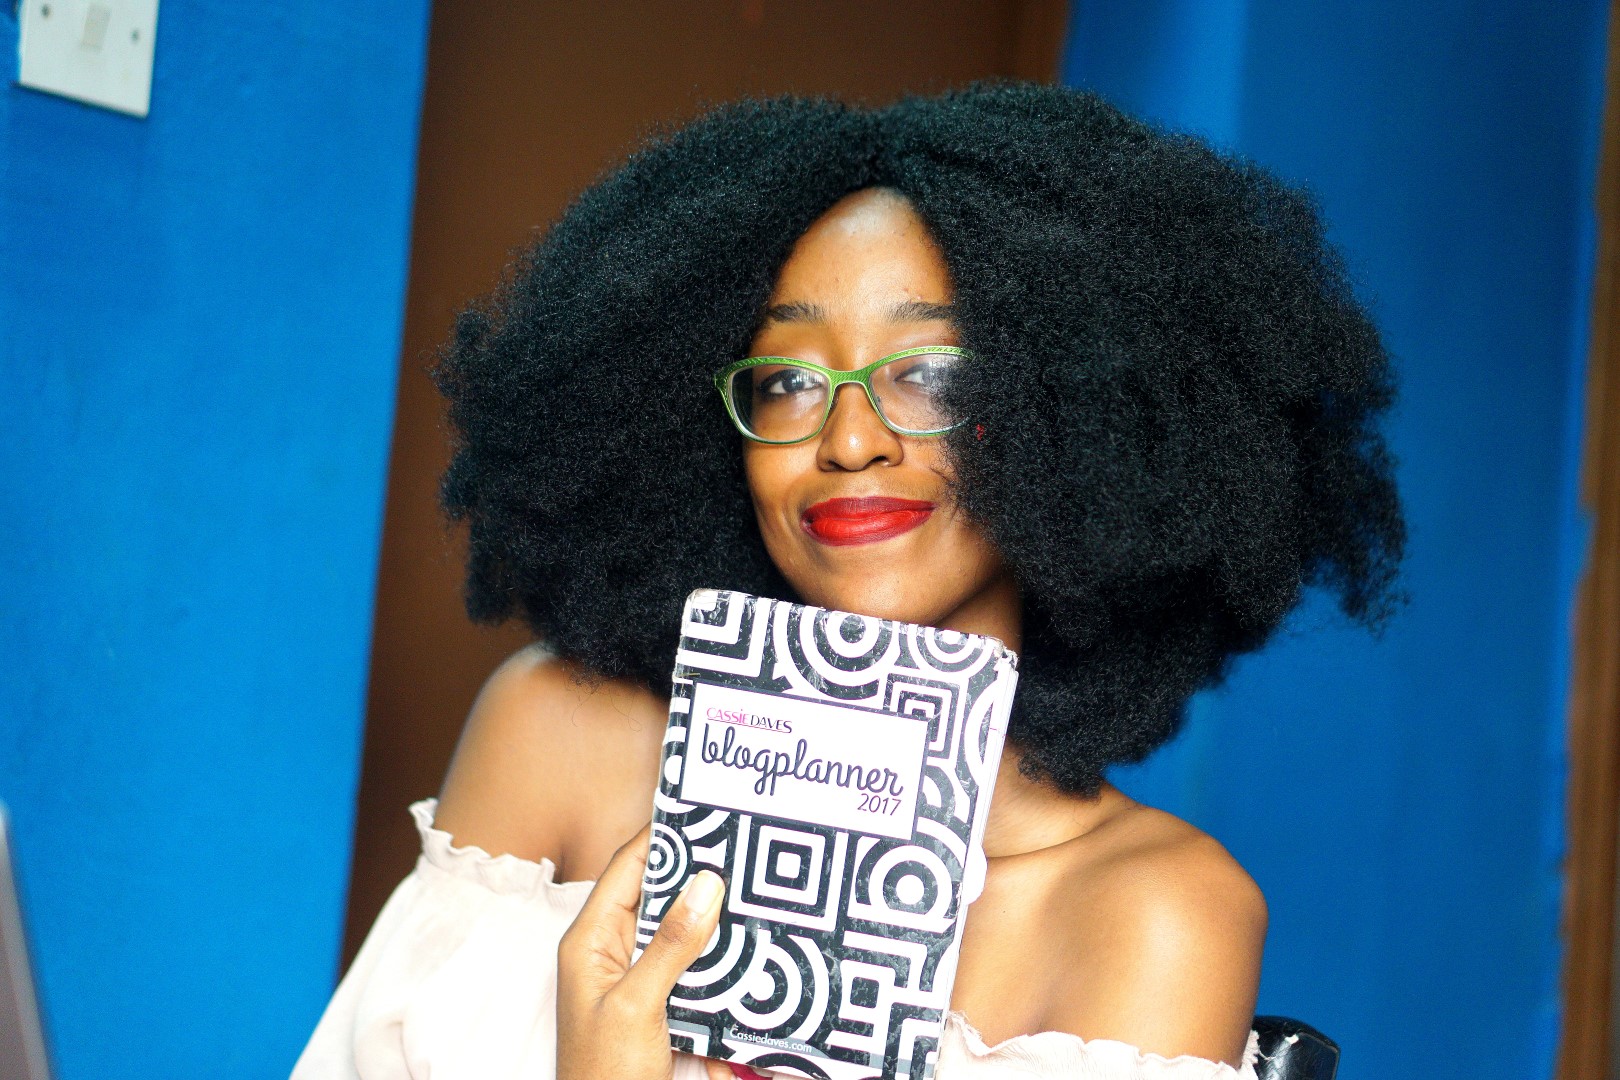 Nigerian fashion blogger cassie daves holding up the cassie daves blog planner